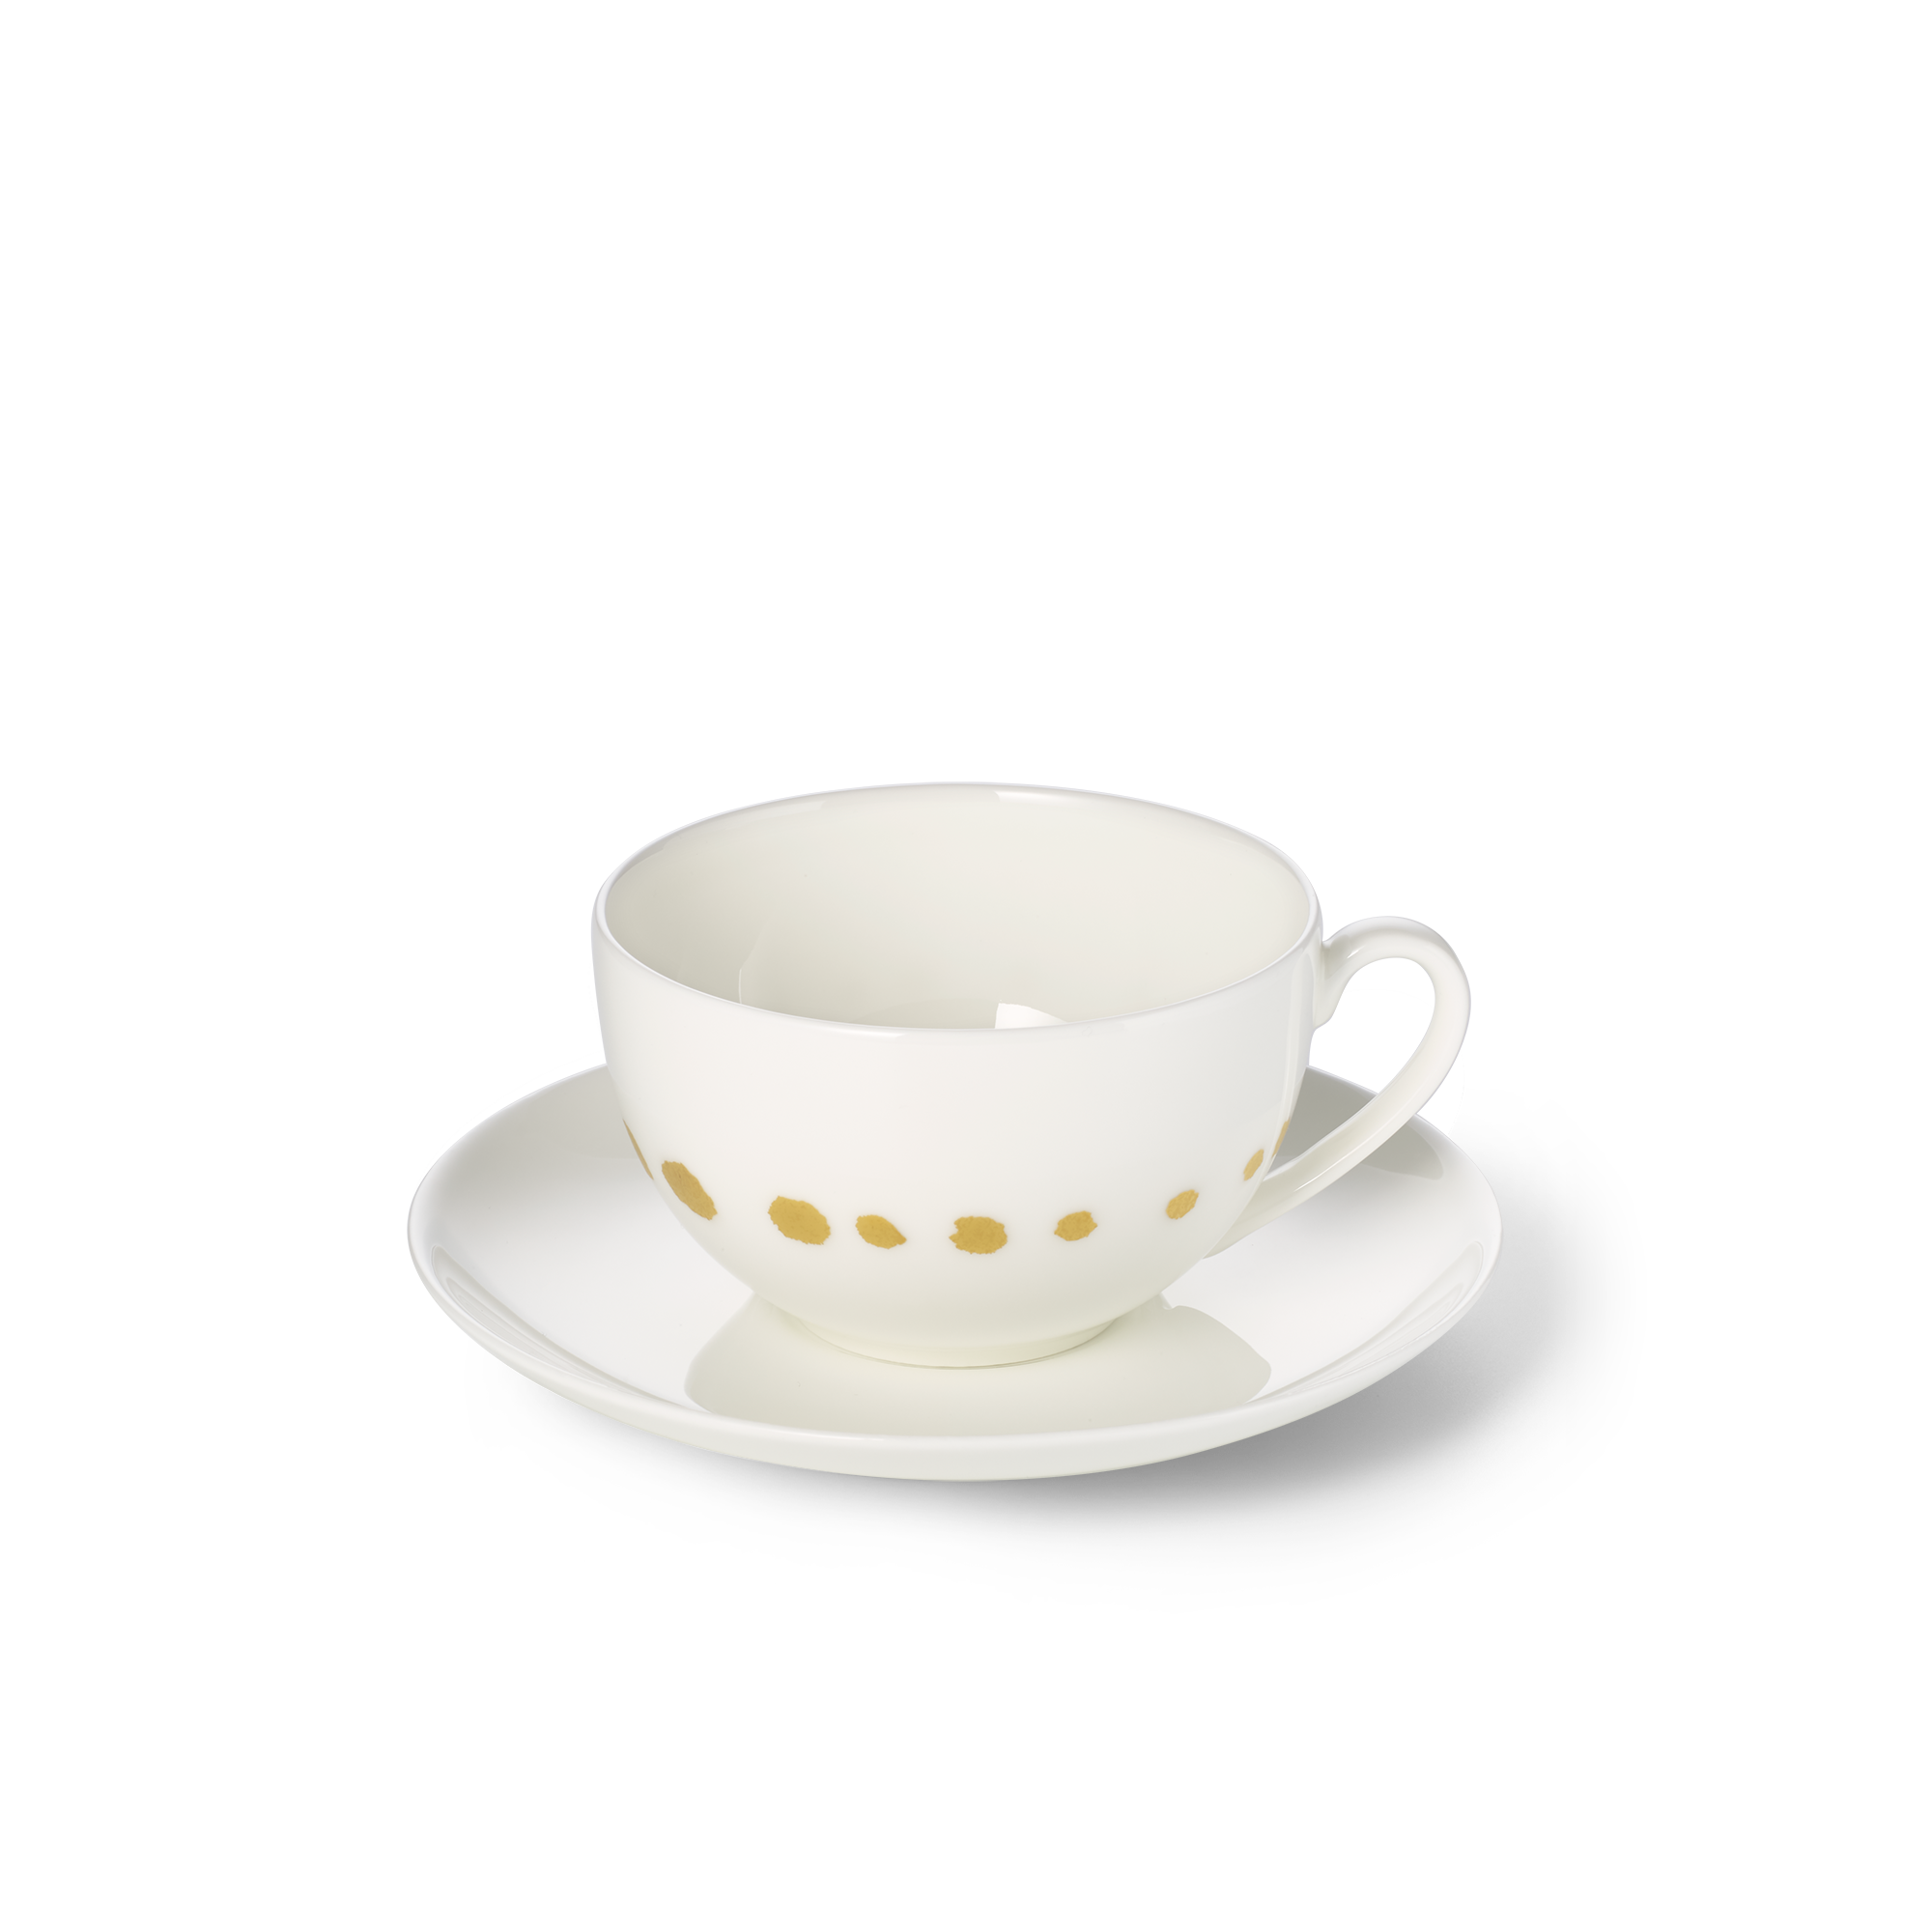 Golden Pearls coffee mug